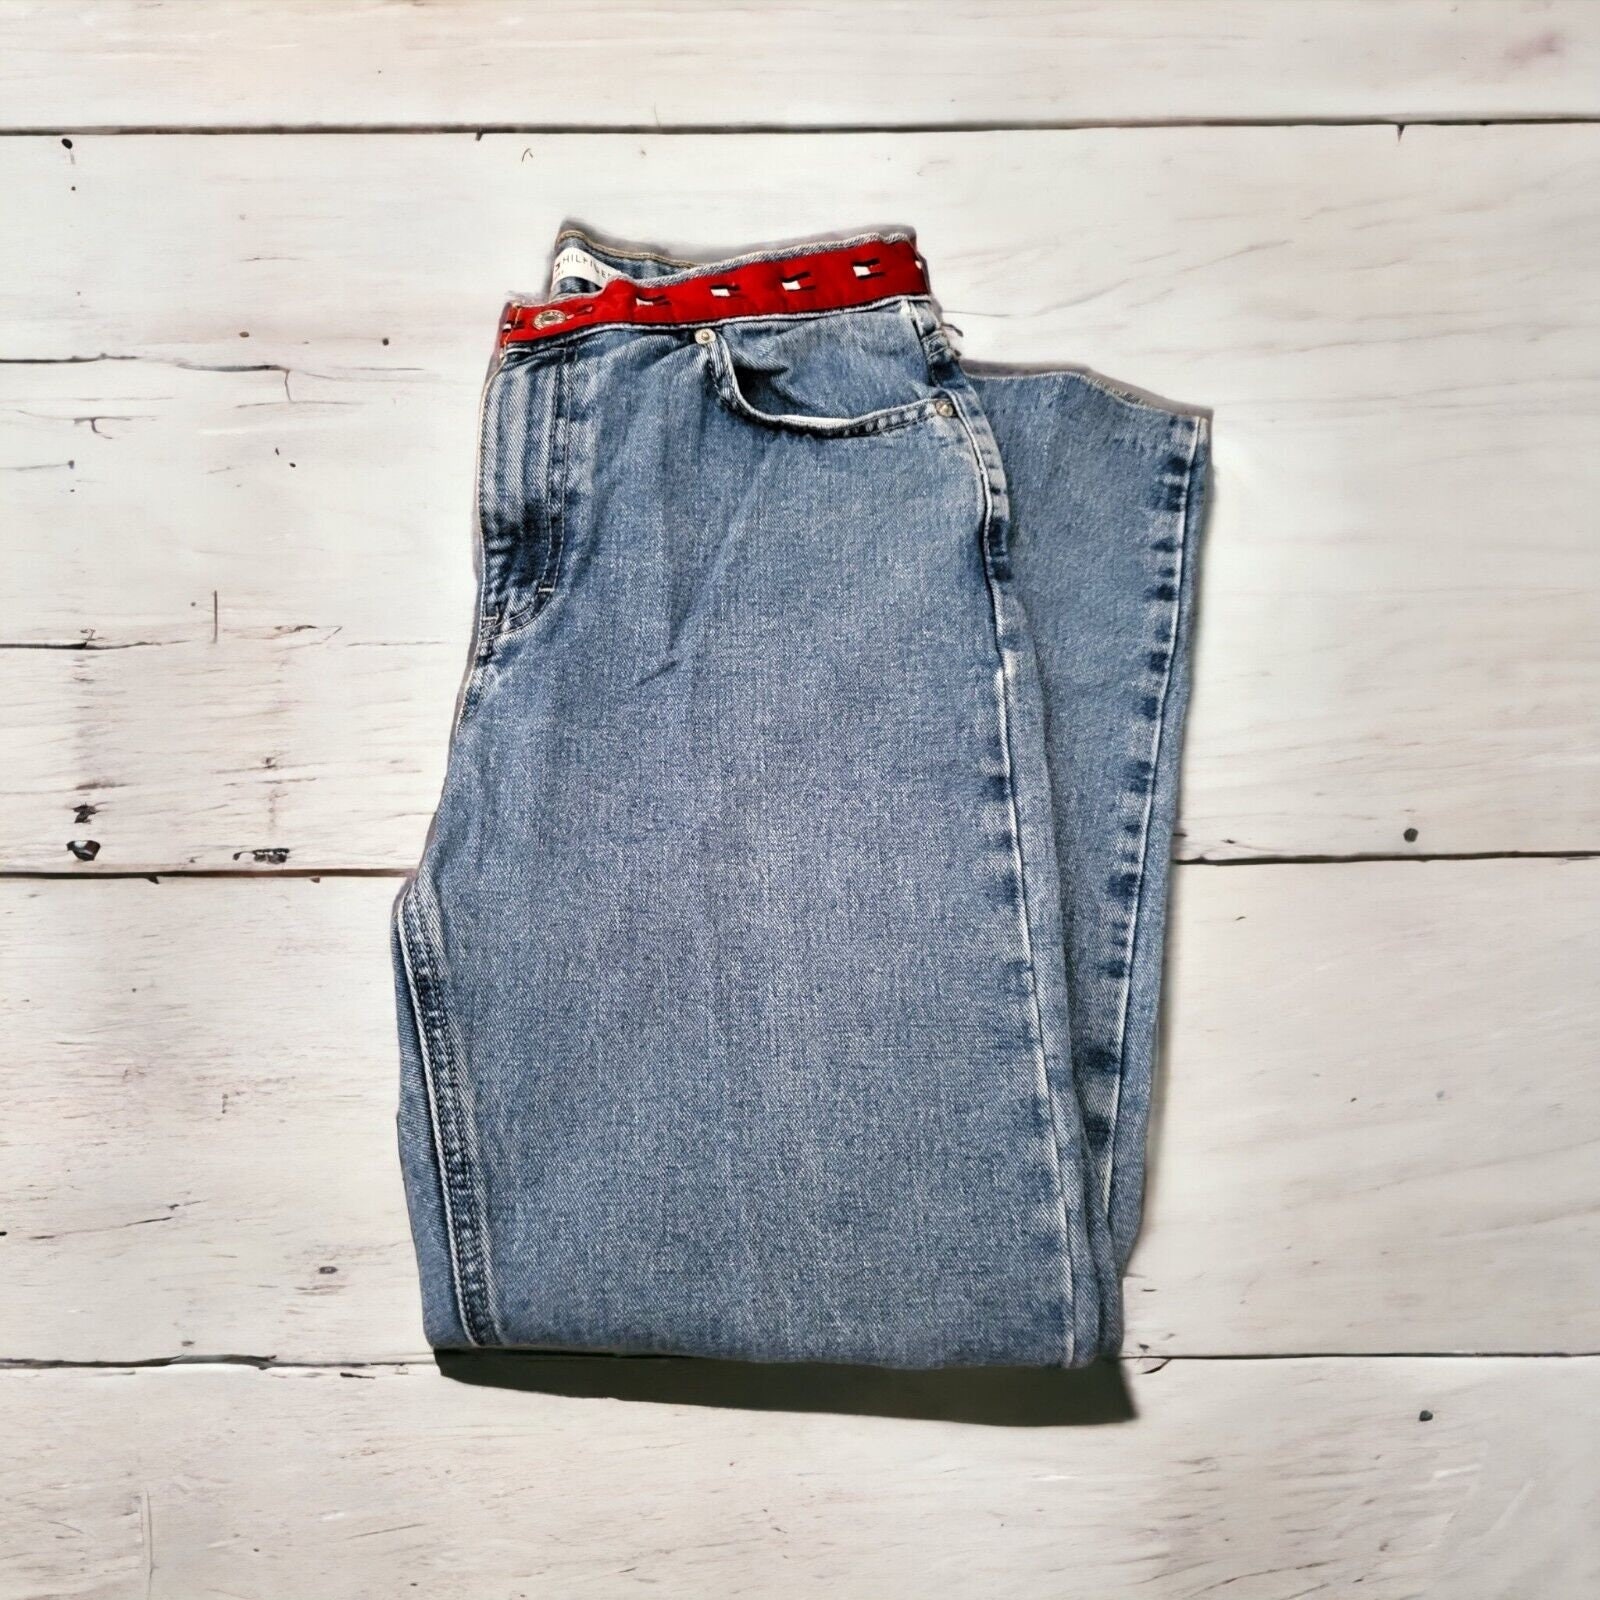 Convenient Pant Waist Expander Waistband Skirt Trousers Jeans Elastic Button  Extender. Set of Two. 